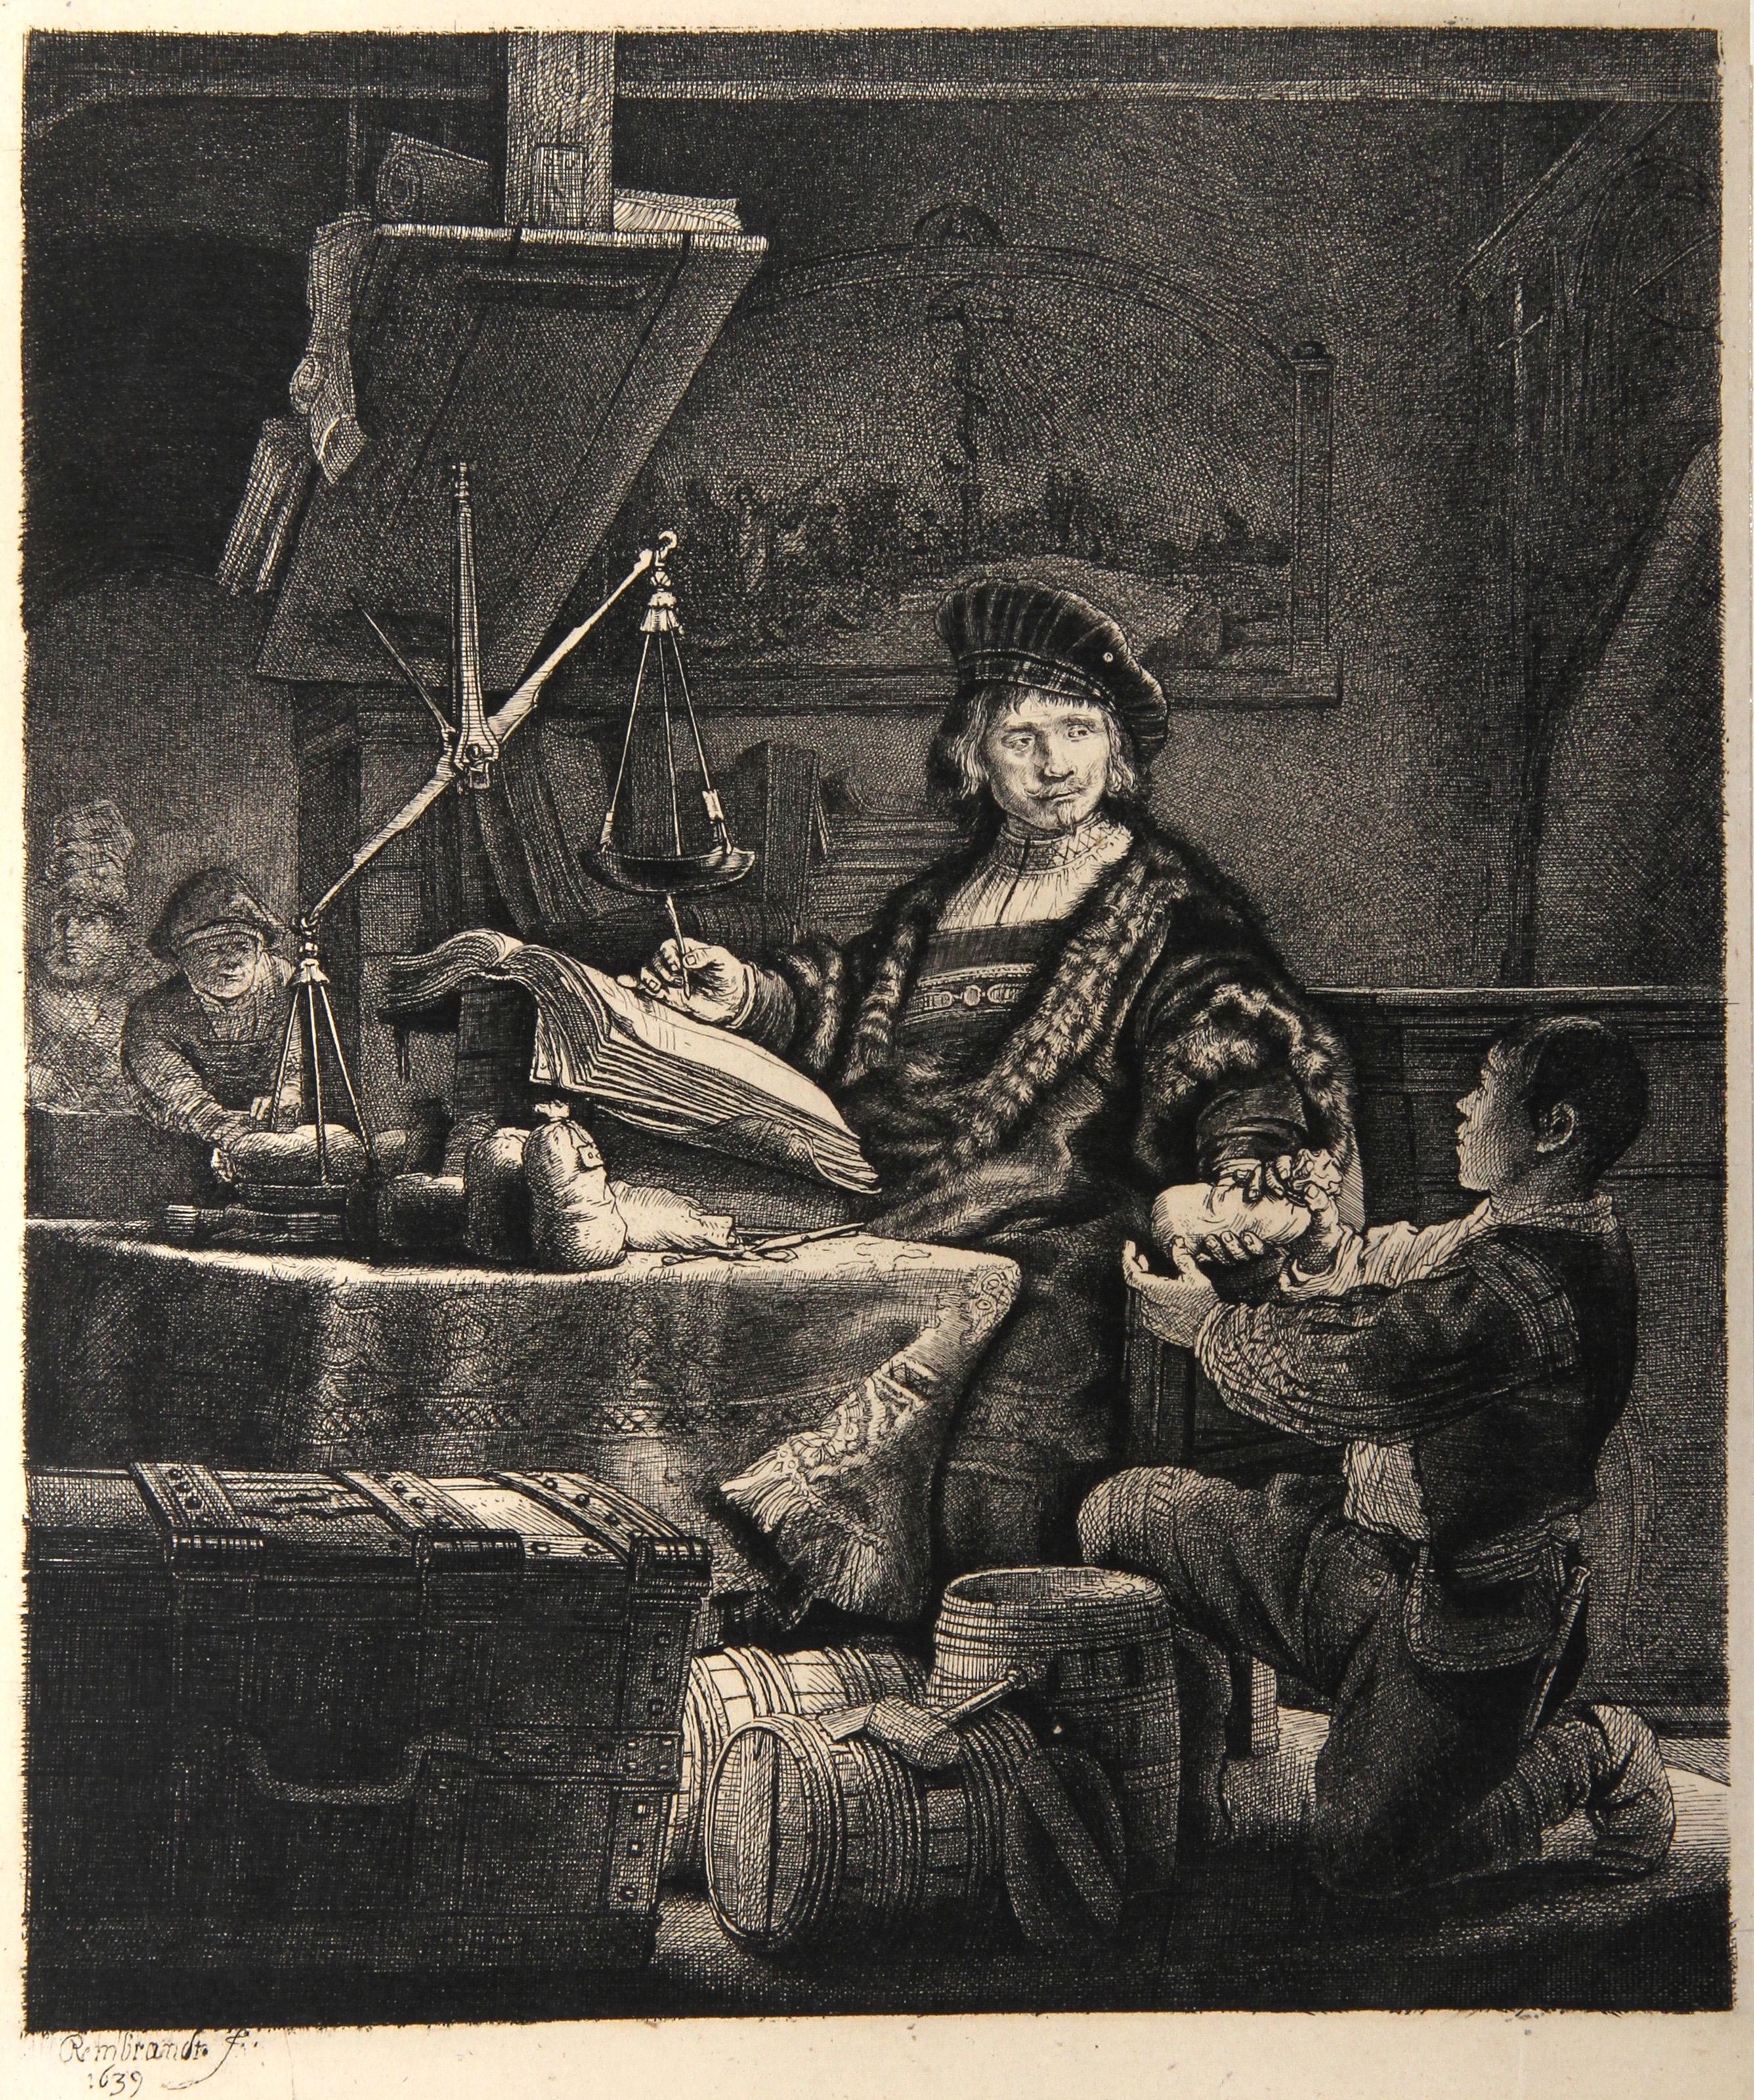 Rembrandt van Rijn, After by Amand Durand, Dutch (1606 - 1669) -  Jan Uytenbogaert dit le Peseur d'Or (B281). Year: 1878 (of original 1639), Medium: Heliogravure, Size: 10  x 8 in. (25.4  x 20.32 cm), Printer: Amand Durand, Description: French